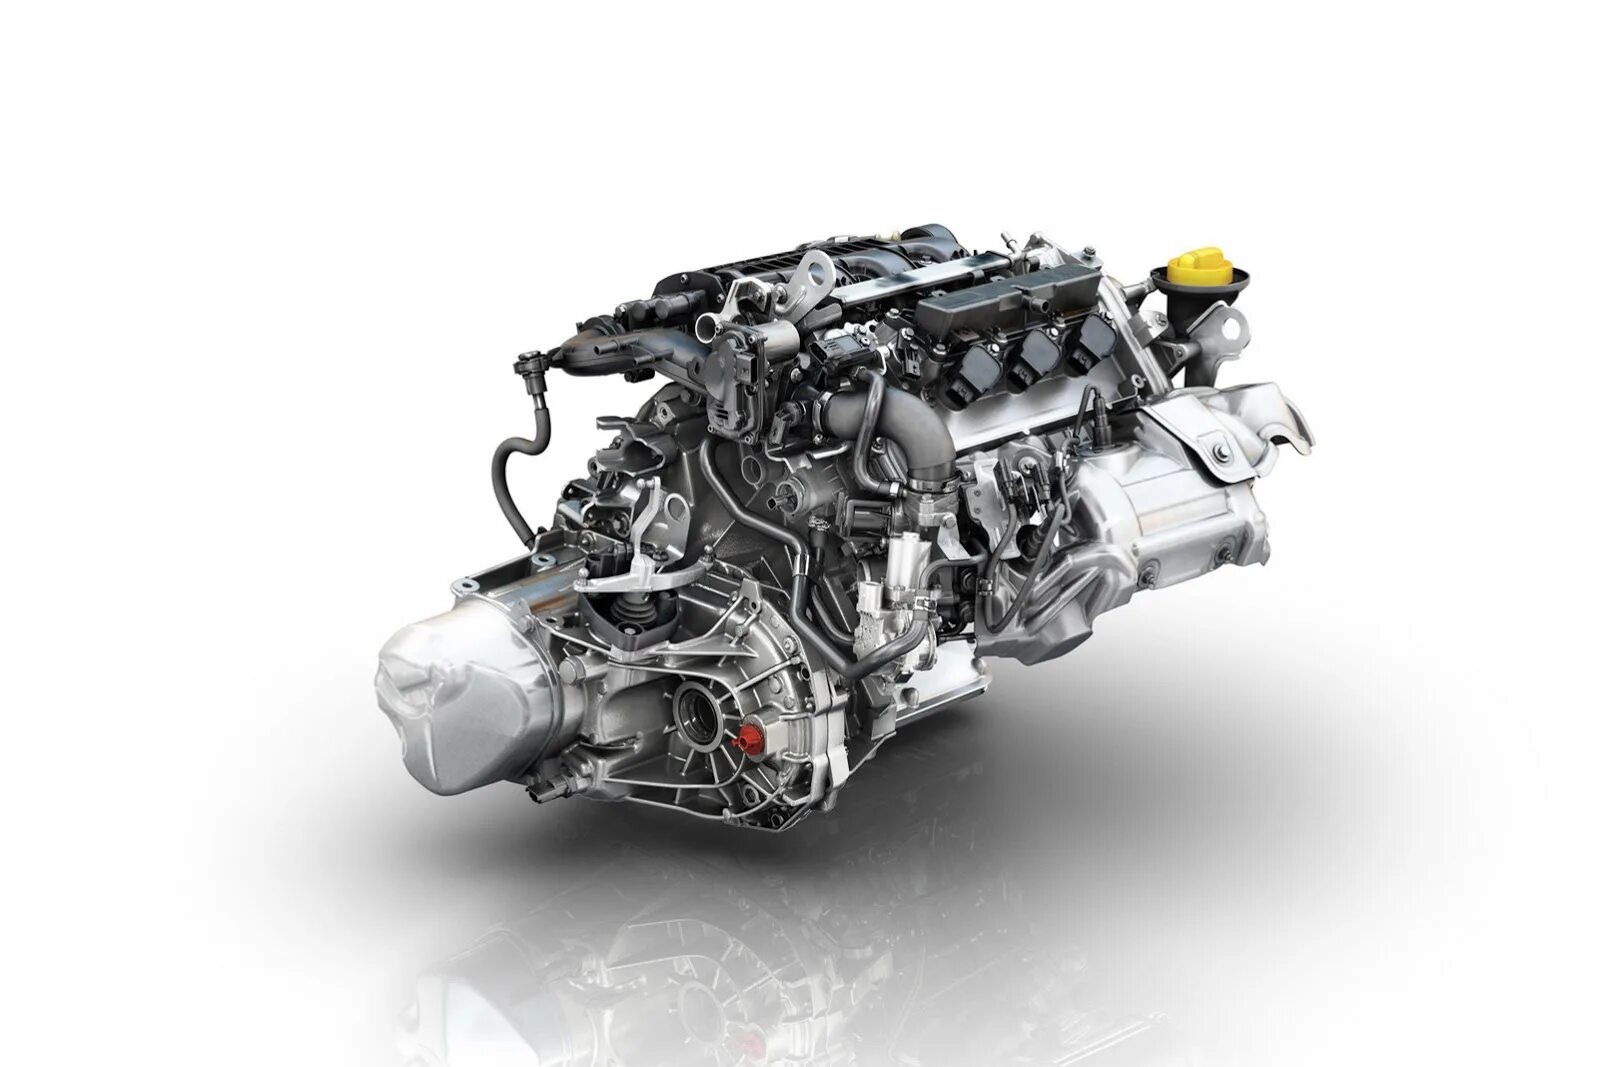 Renault tce. Renault 1.3 TCE. 1.3 Турбо мотор Рено. H5h двигатель Рено. Двигатель h5ht 1.3 TCE.